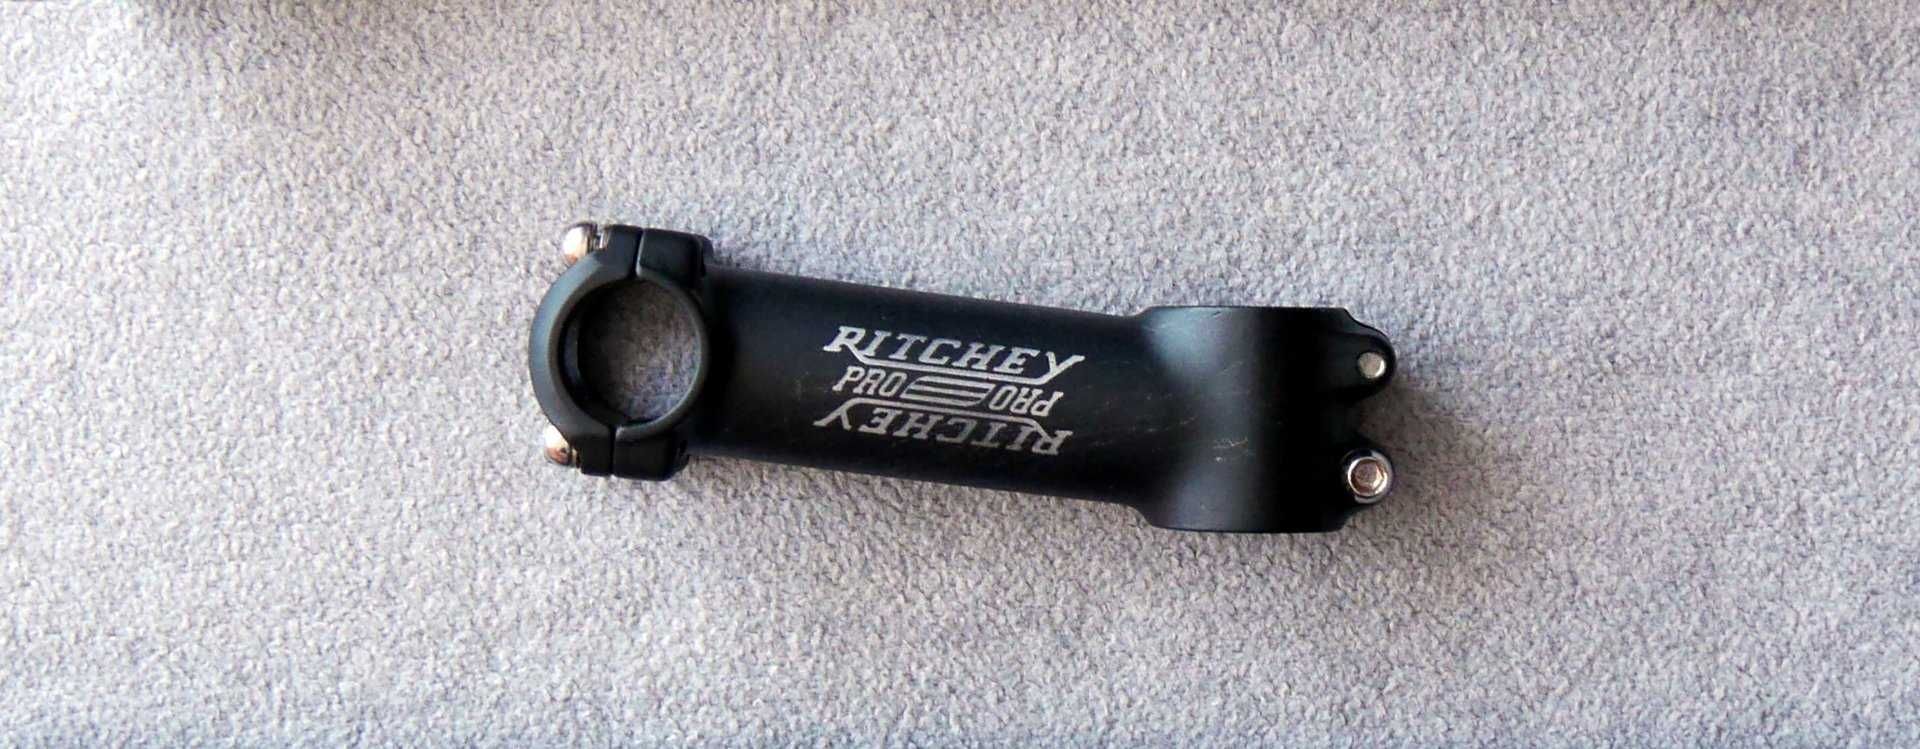 Mostek wspornik kierownicy Ritchey Pro 110mm 6° Ø25,4mm stop AL2014-T6